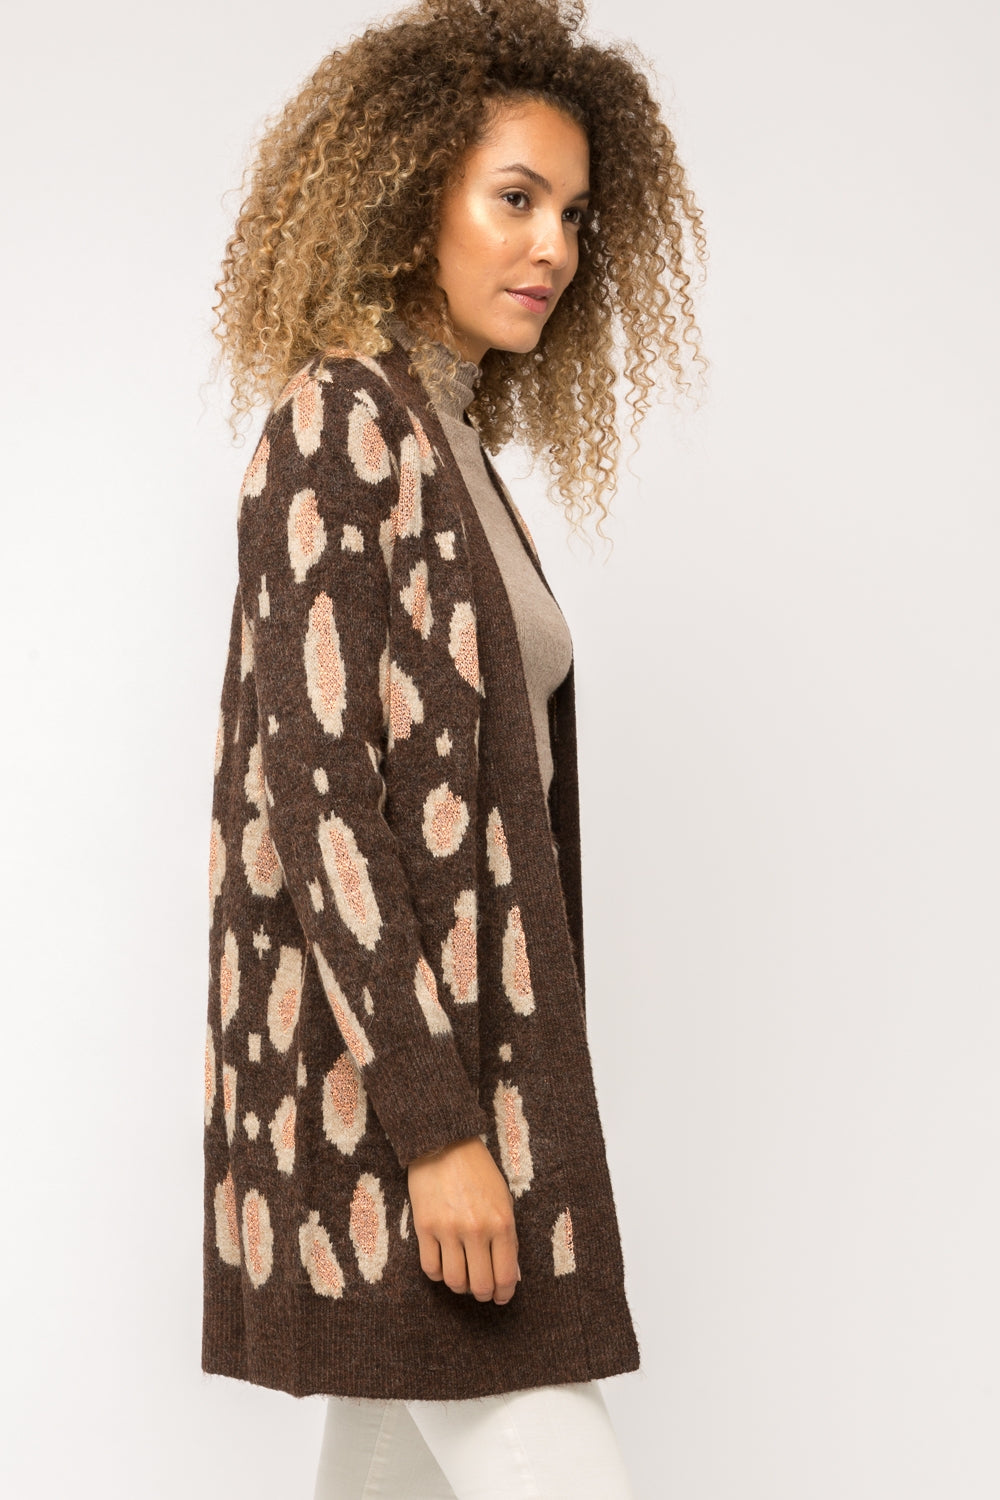 Leopard Mix Lurex Cardigan Sweater - Wild Luxe Boutique